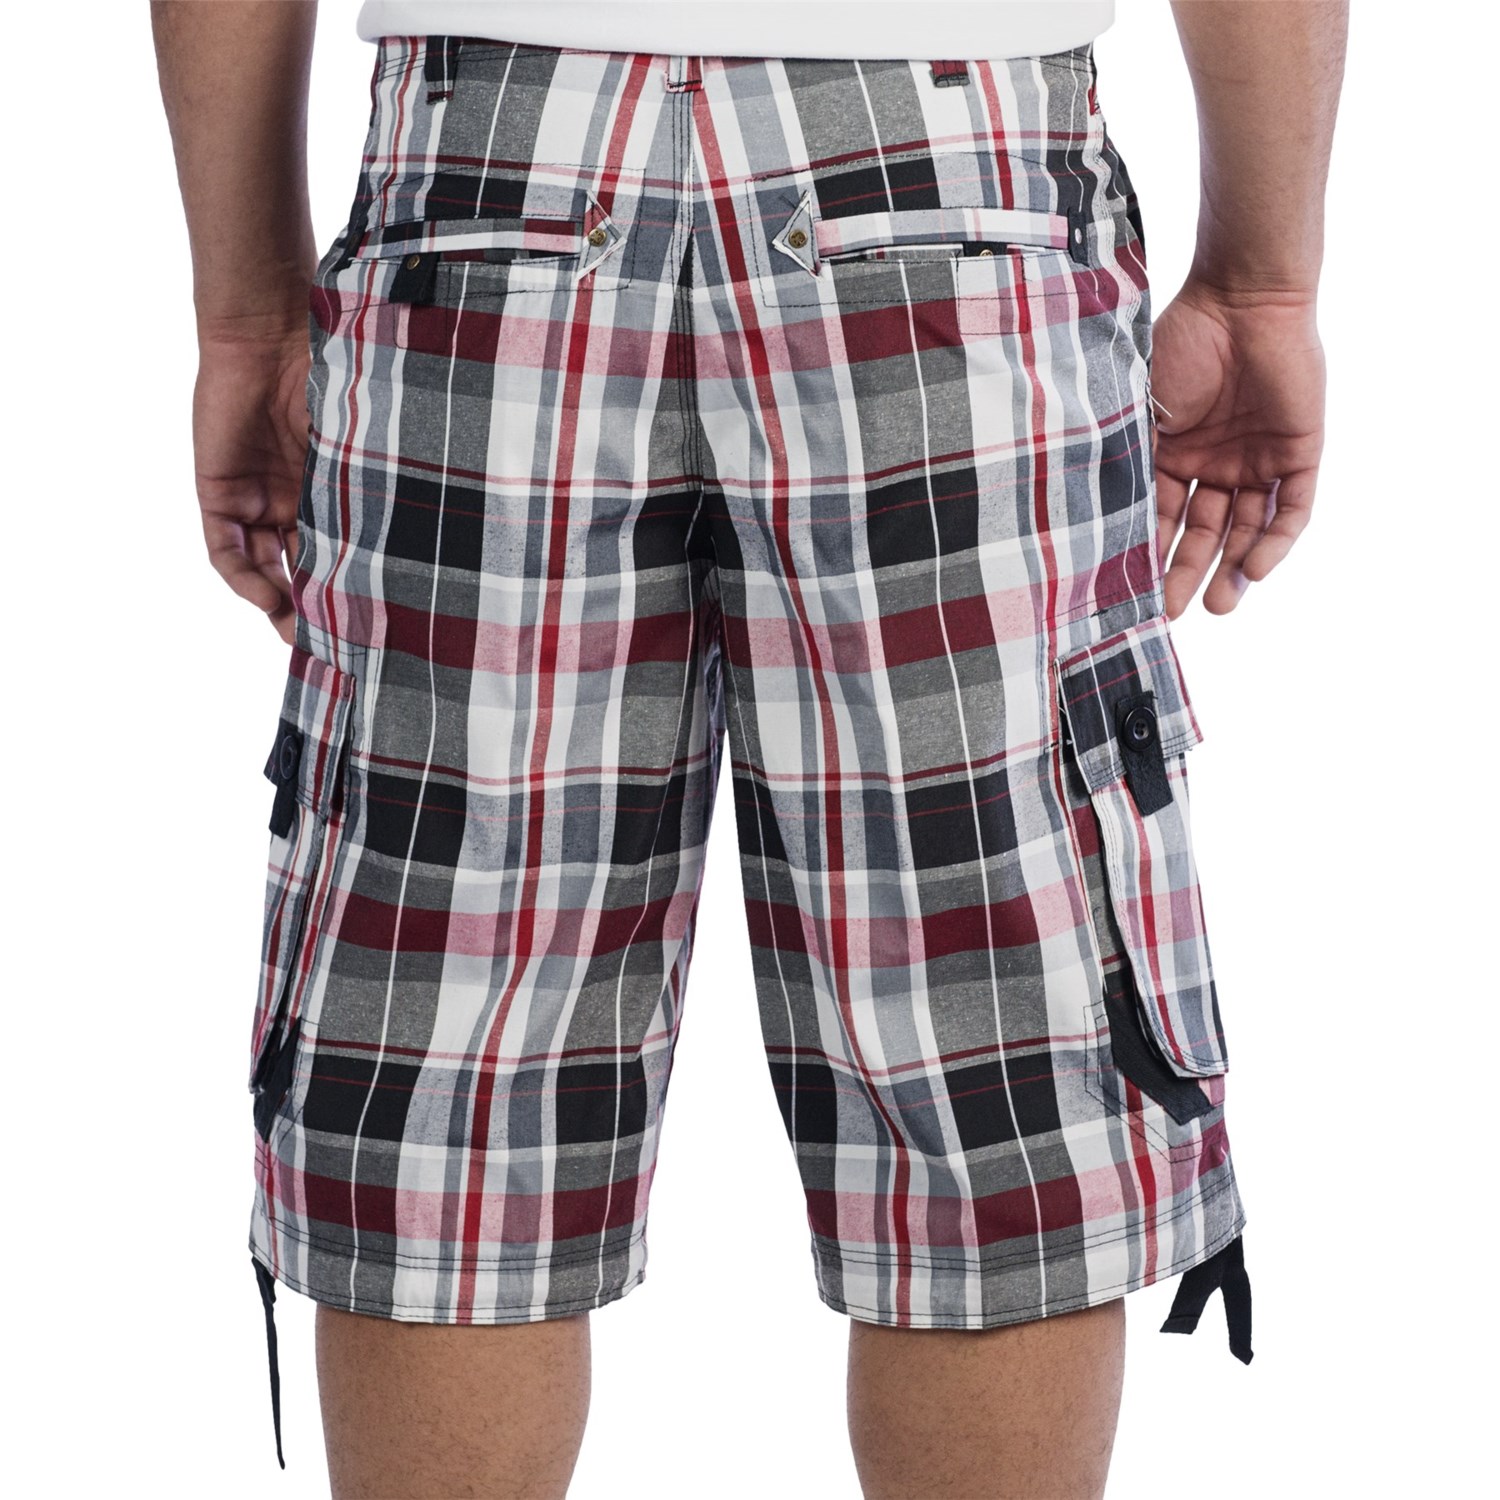 Plaid Shorts For Men 37